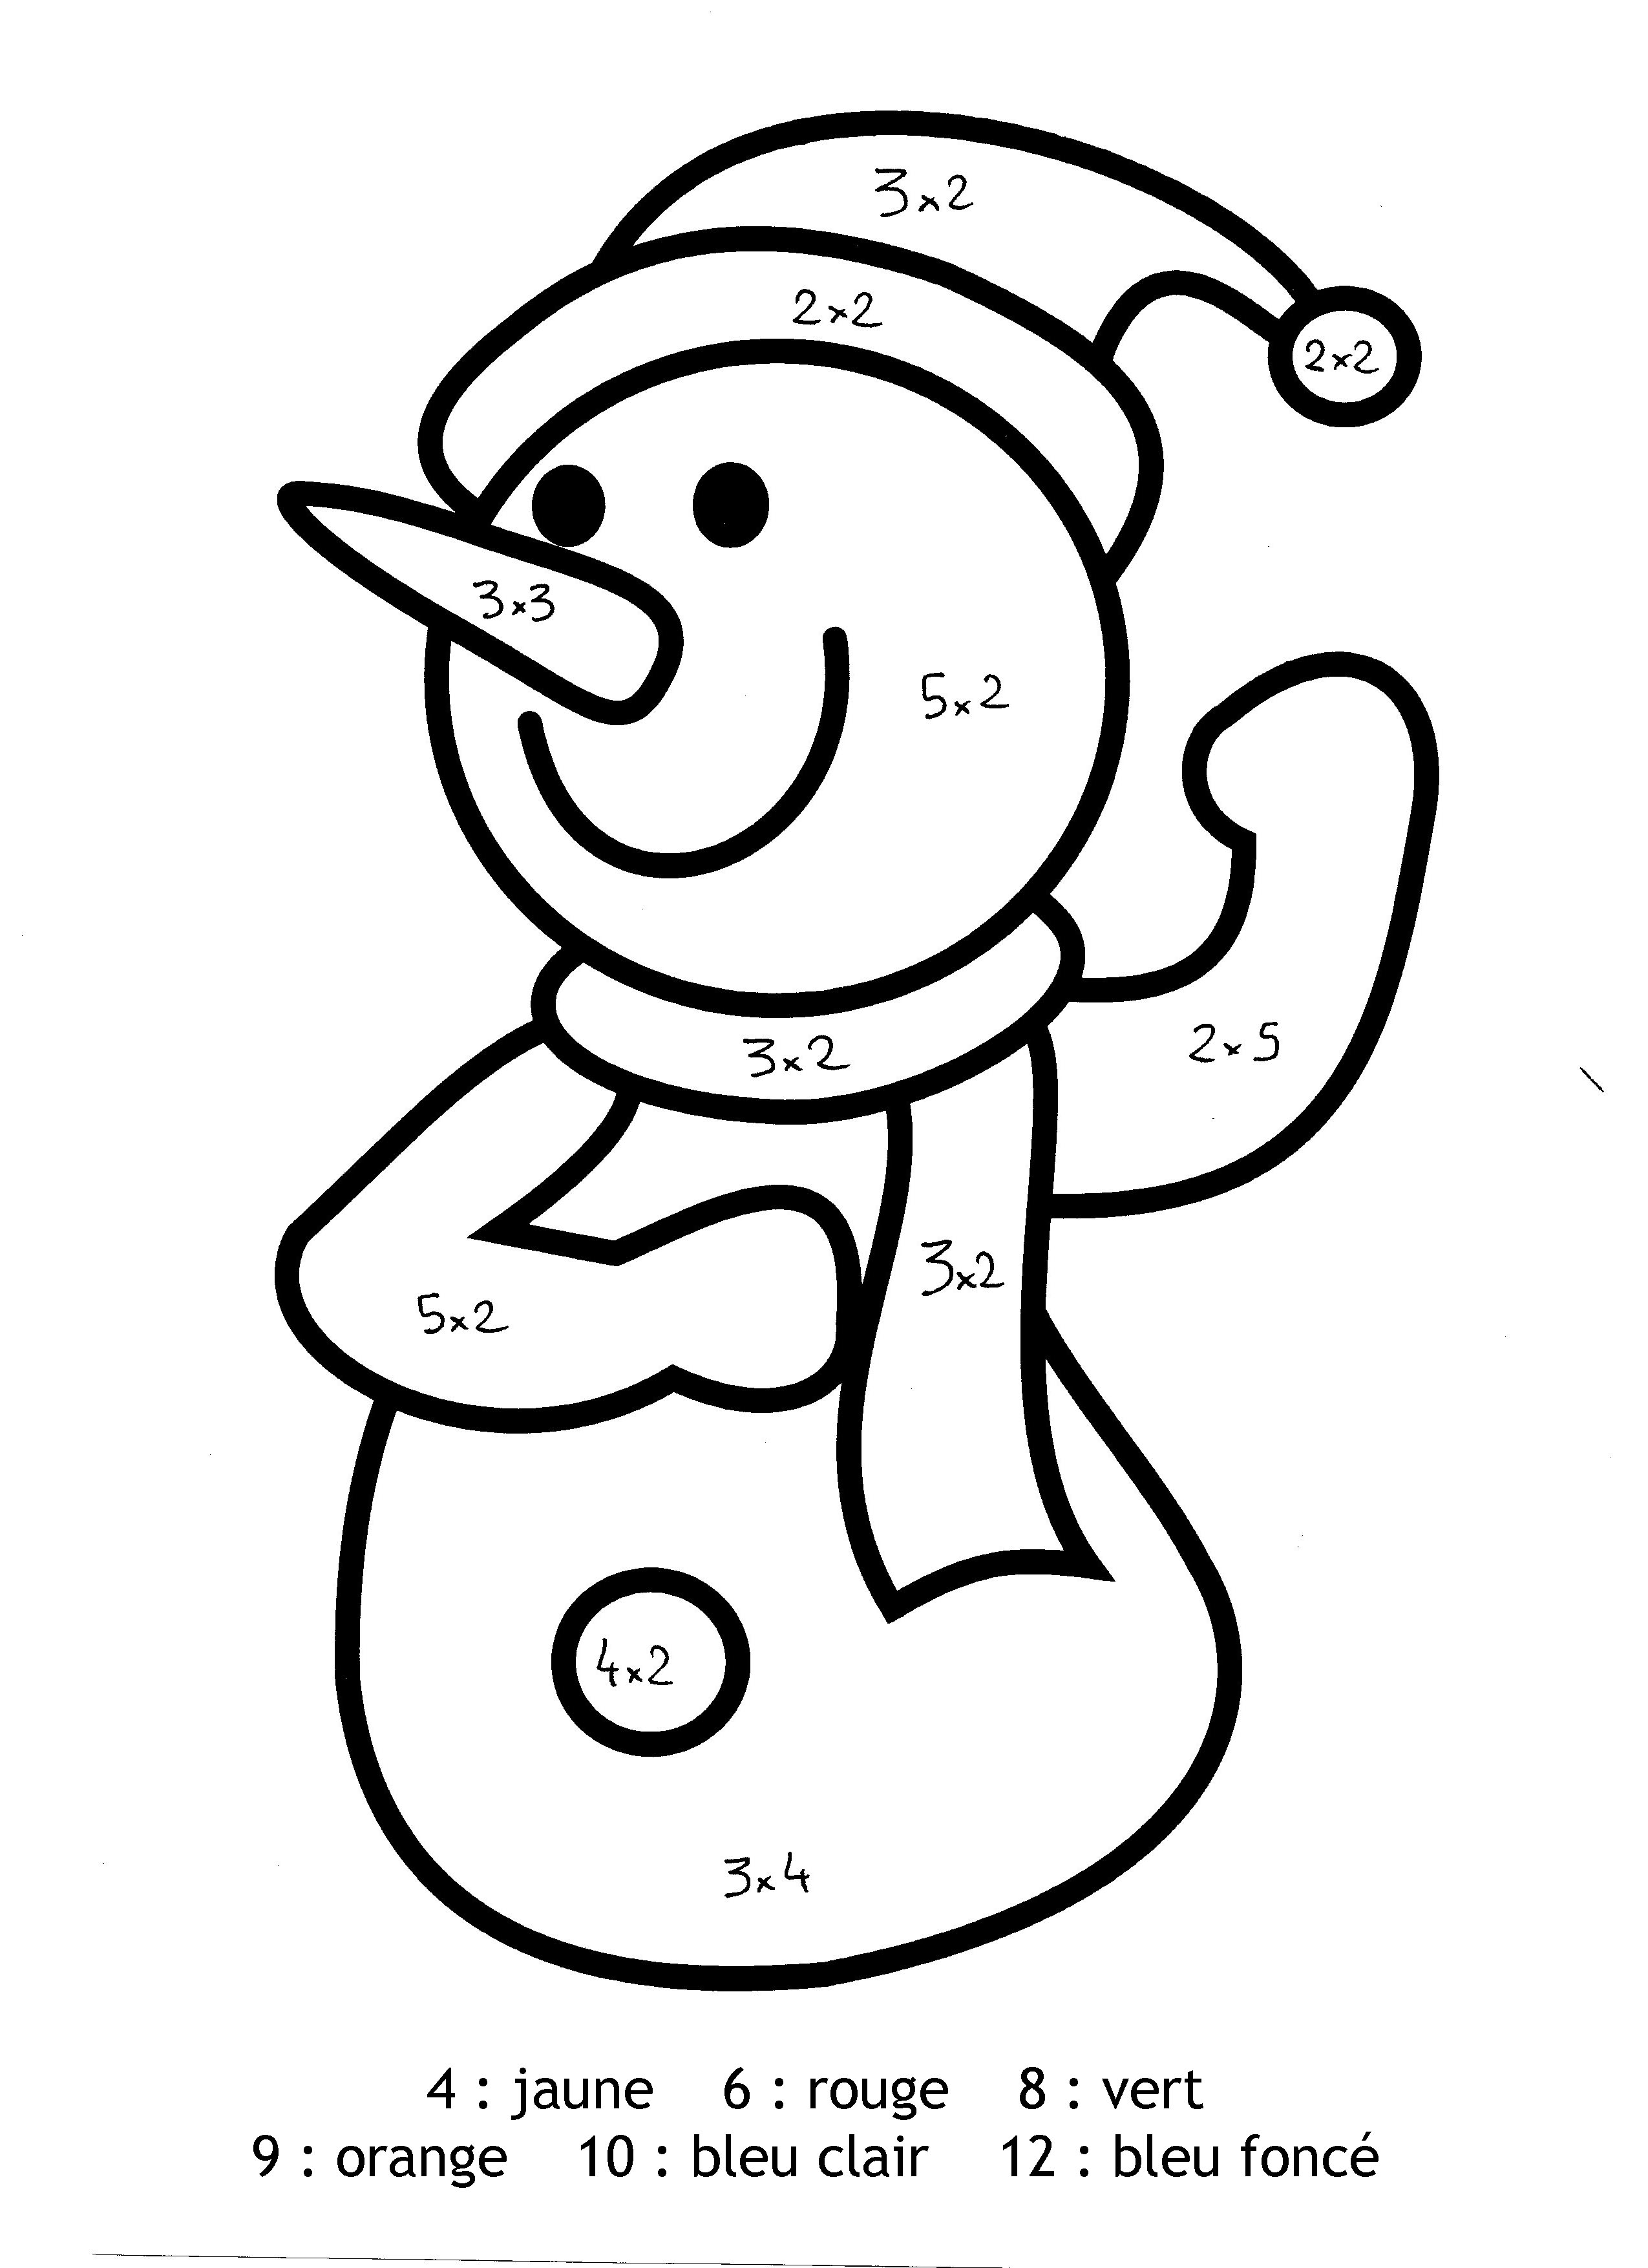 Dibujo para colorear: Muñeco de nieve (Personajes) #89187 - Dibujos para Colorear e Imprimir Gratis